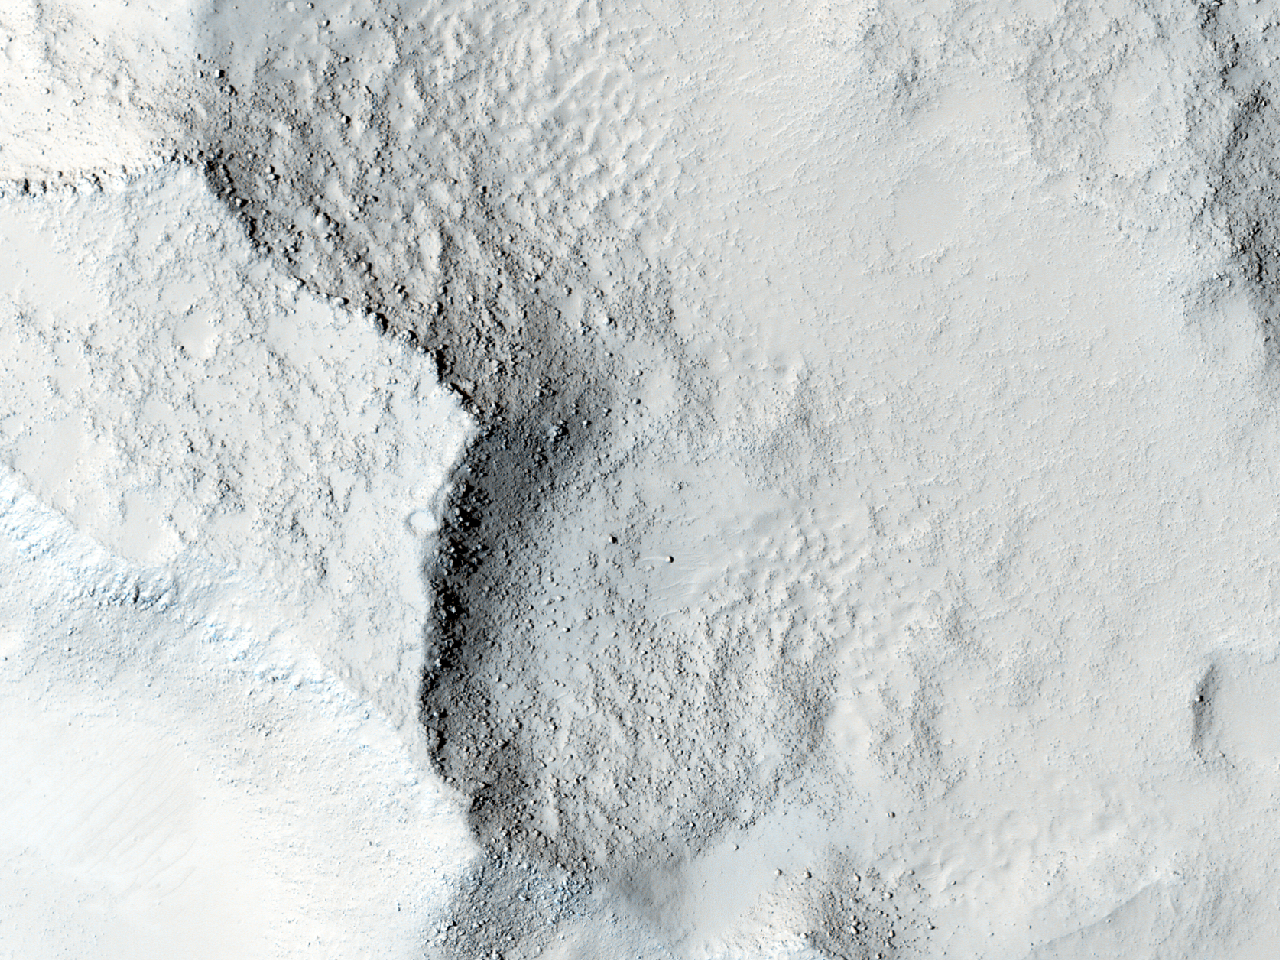 平原上的小岩岛 (Utopia Planitia)